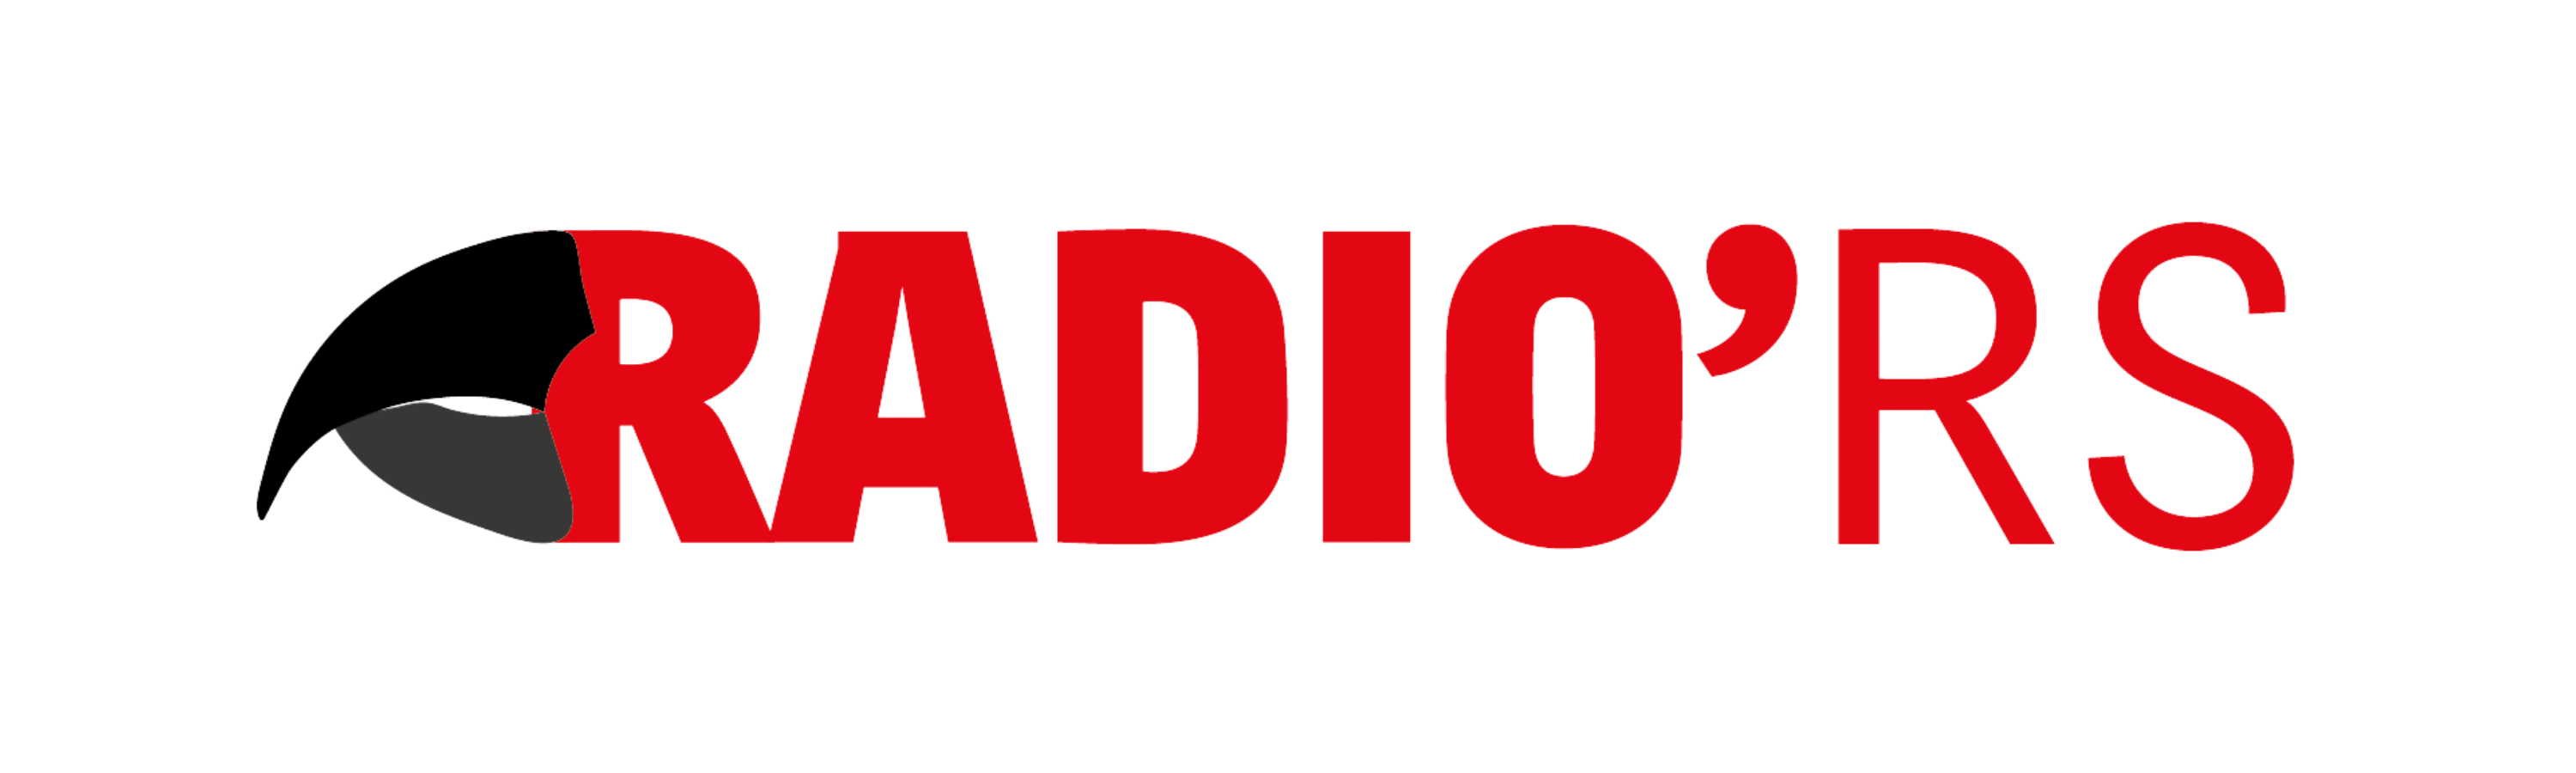 Radio'RS